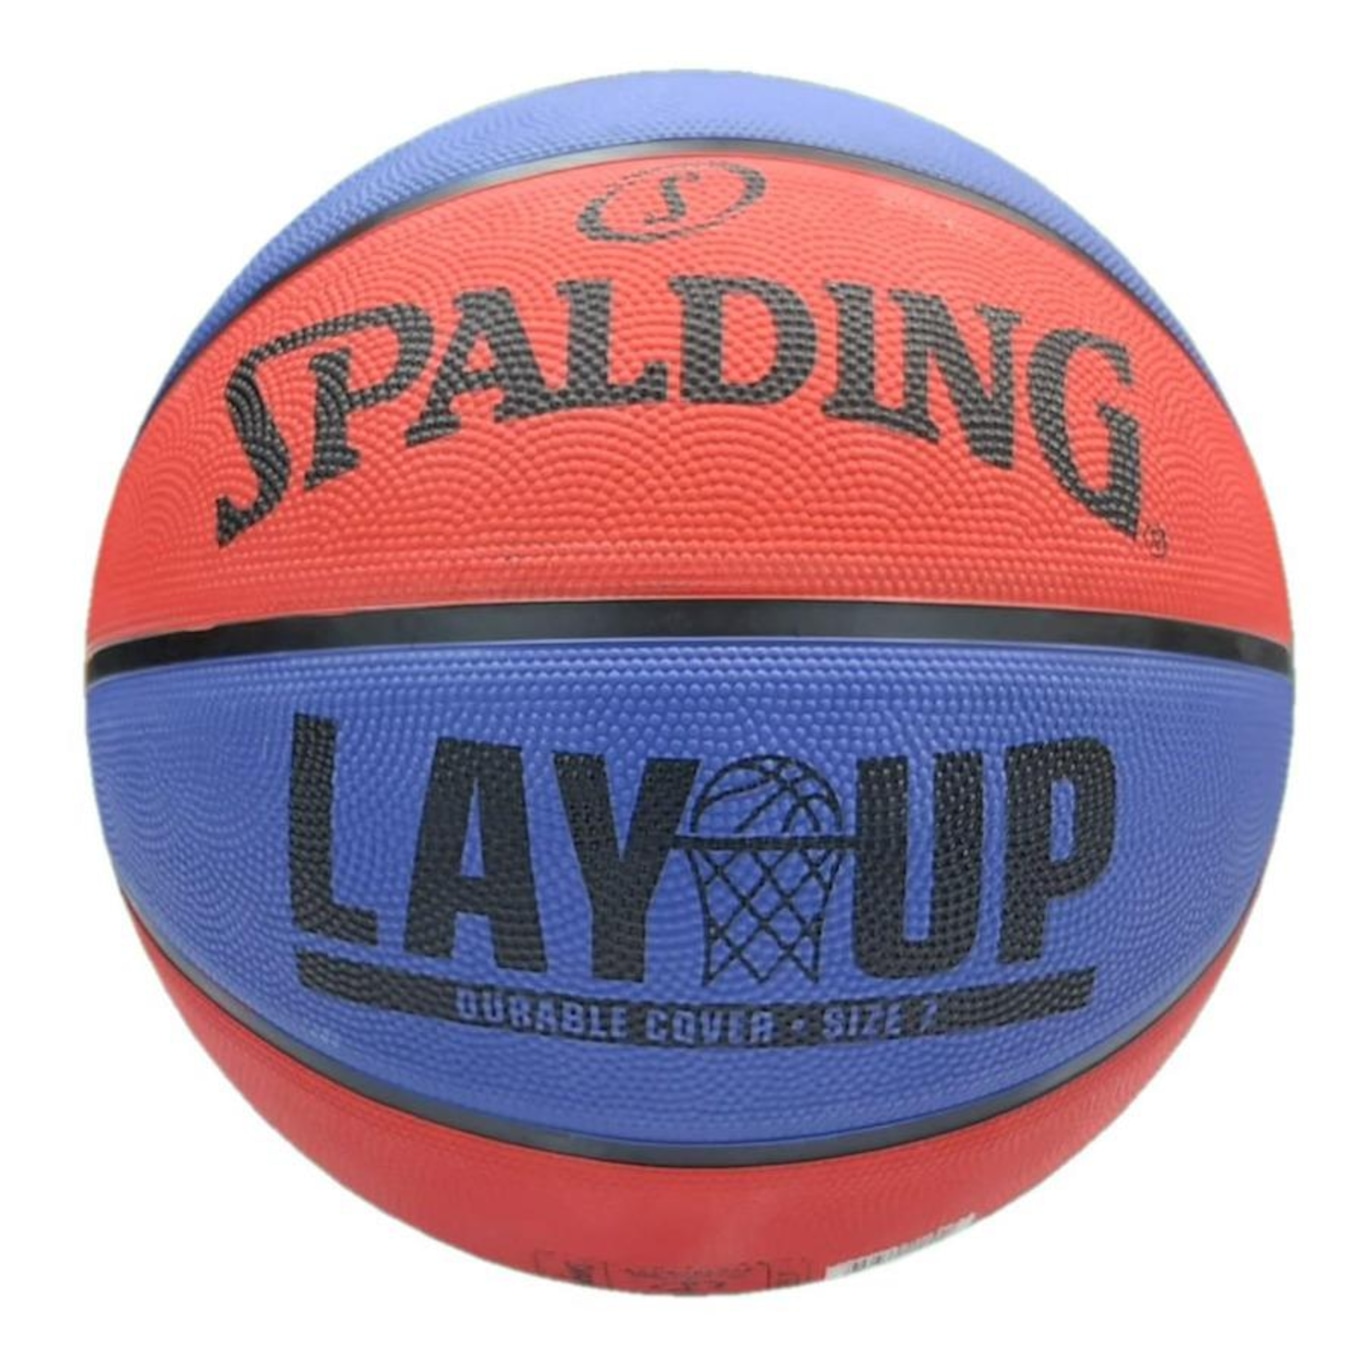 Mini Bola De Basquete Spalding - Lay Up - Borracha - Laranja